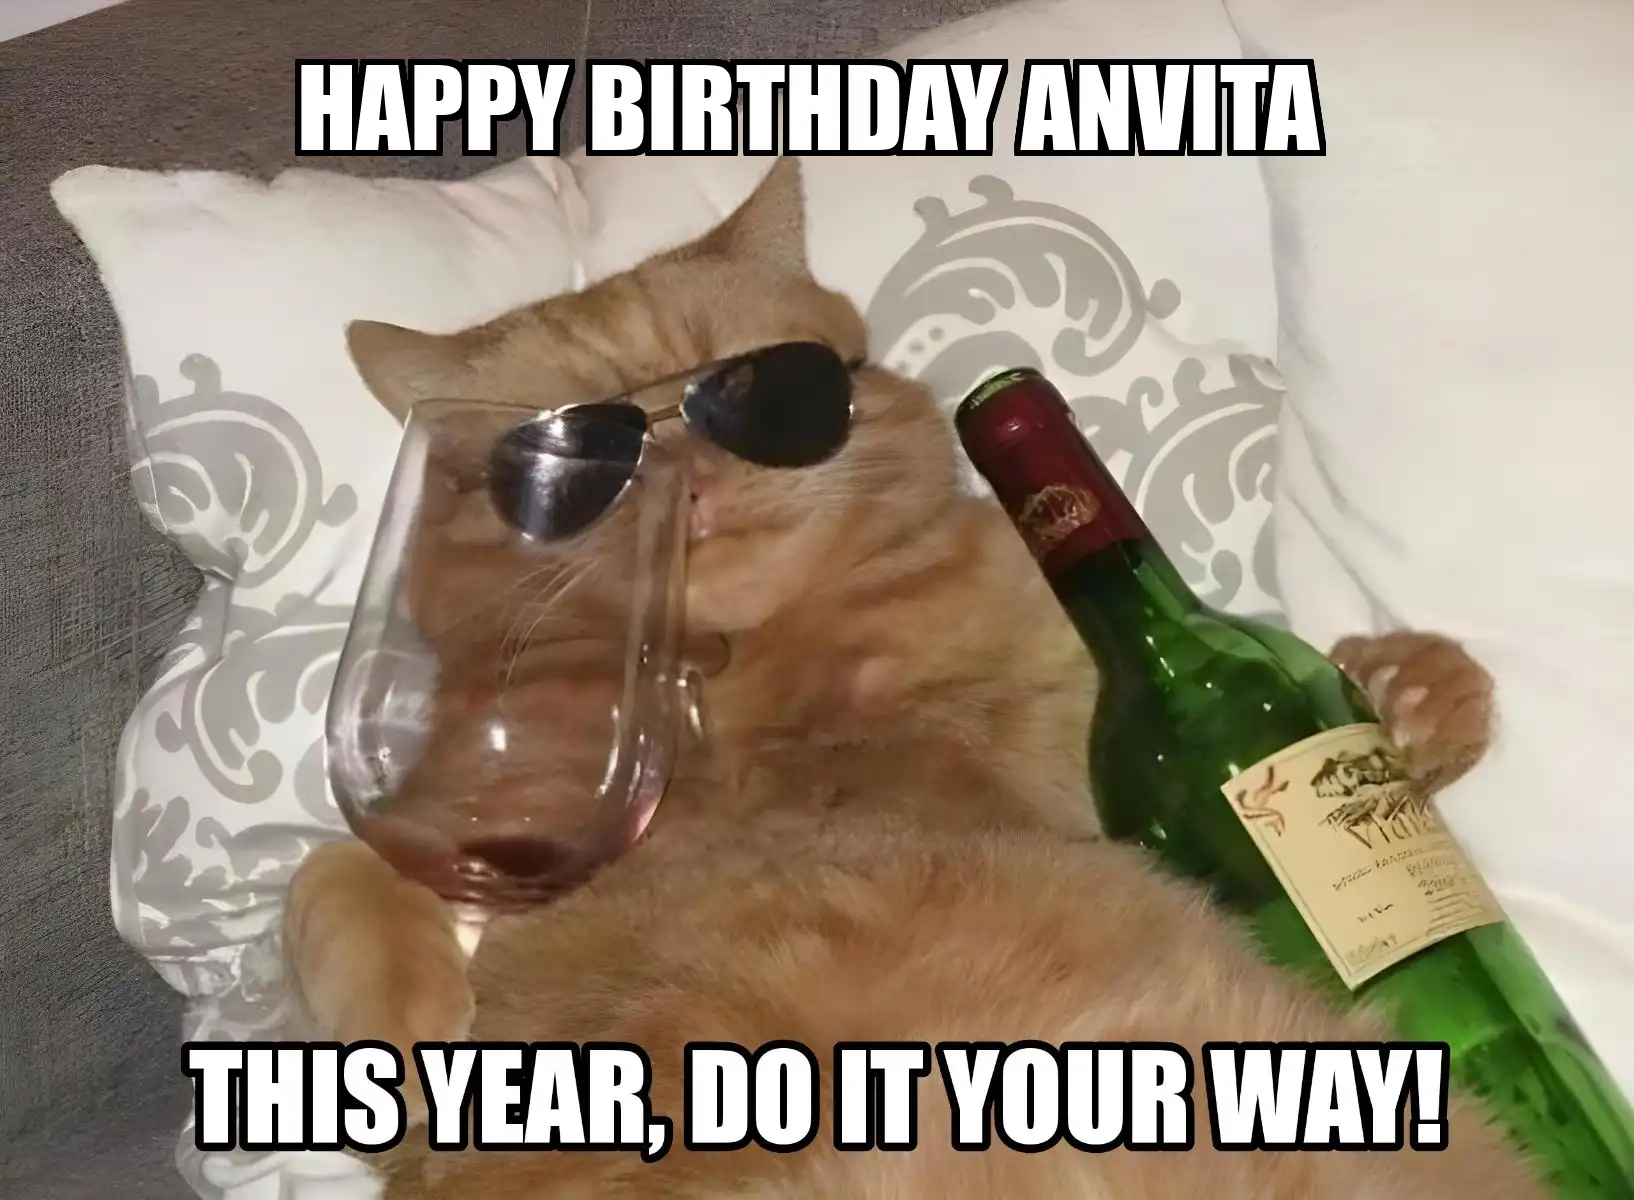 Happy Birthday Anvita This Year Do It Your Way Meme